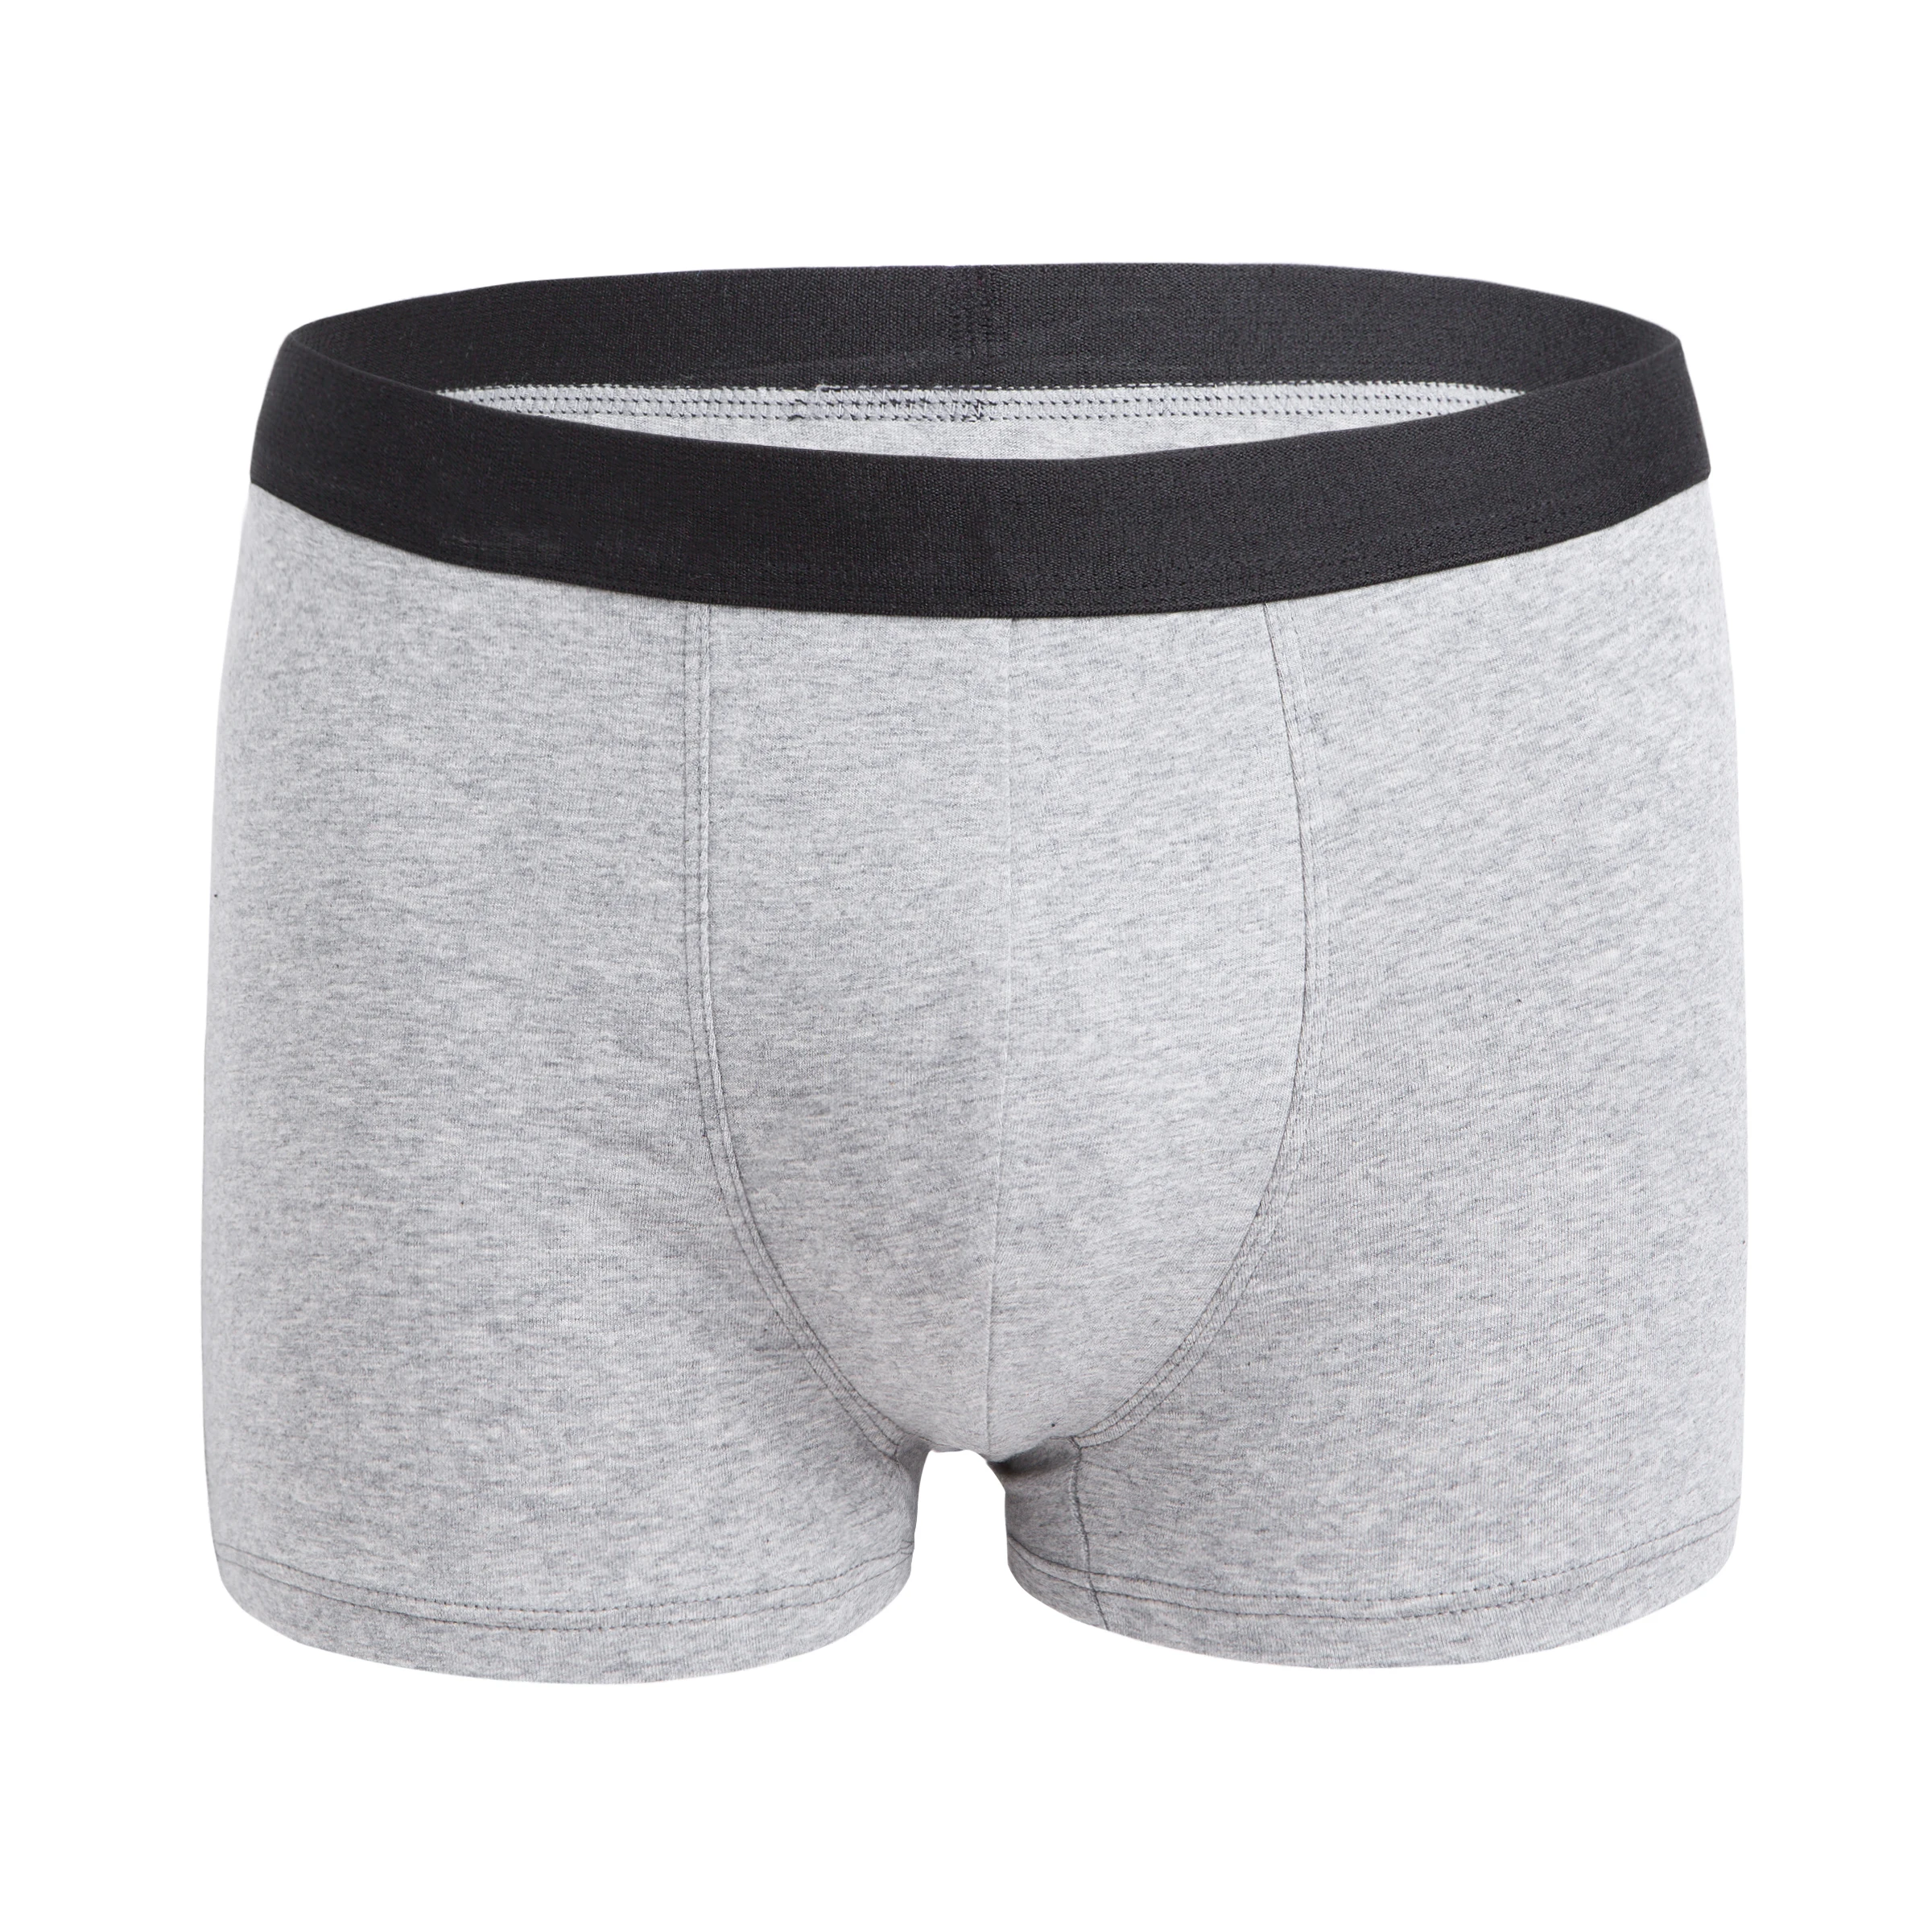 Underwear Boxer Shorts Man Soft Long  Tommy Hilfiger Long Boxer Briefs -  Long Boxer - Aliexpress